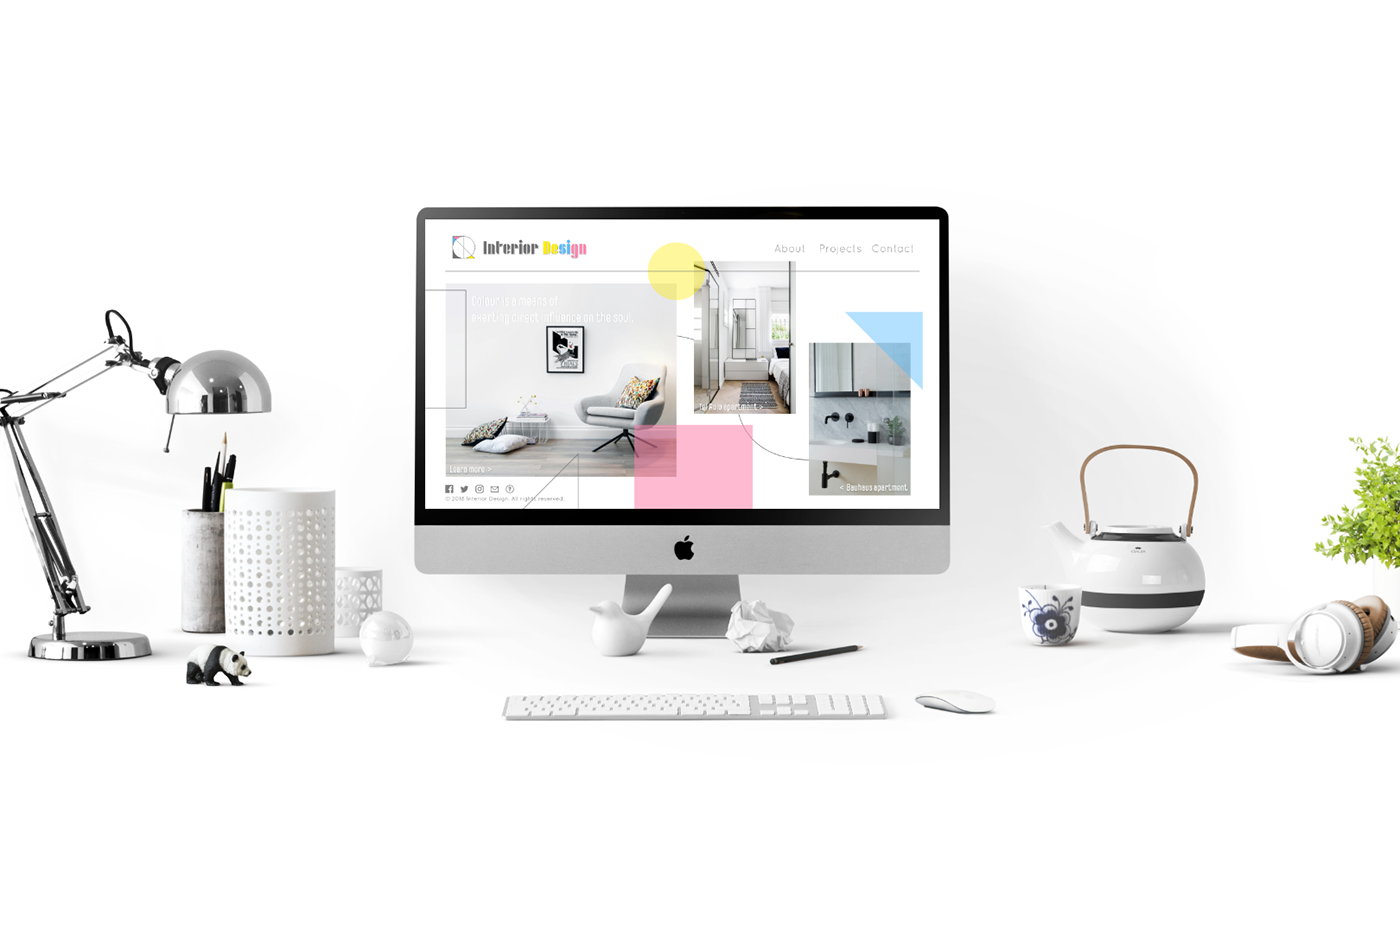 AdobeHiddenTreasures homepage webpage design DesignChallenge4 adobexd bauhaus CMYK minimalist